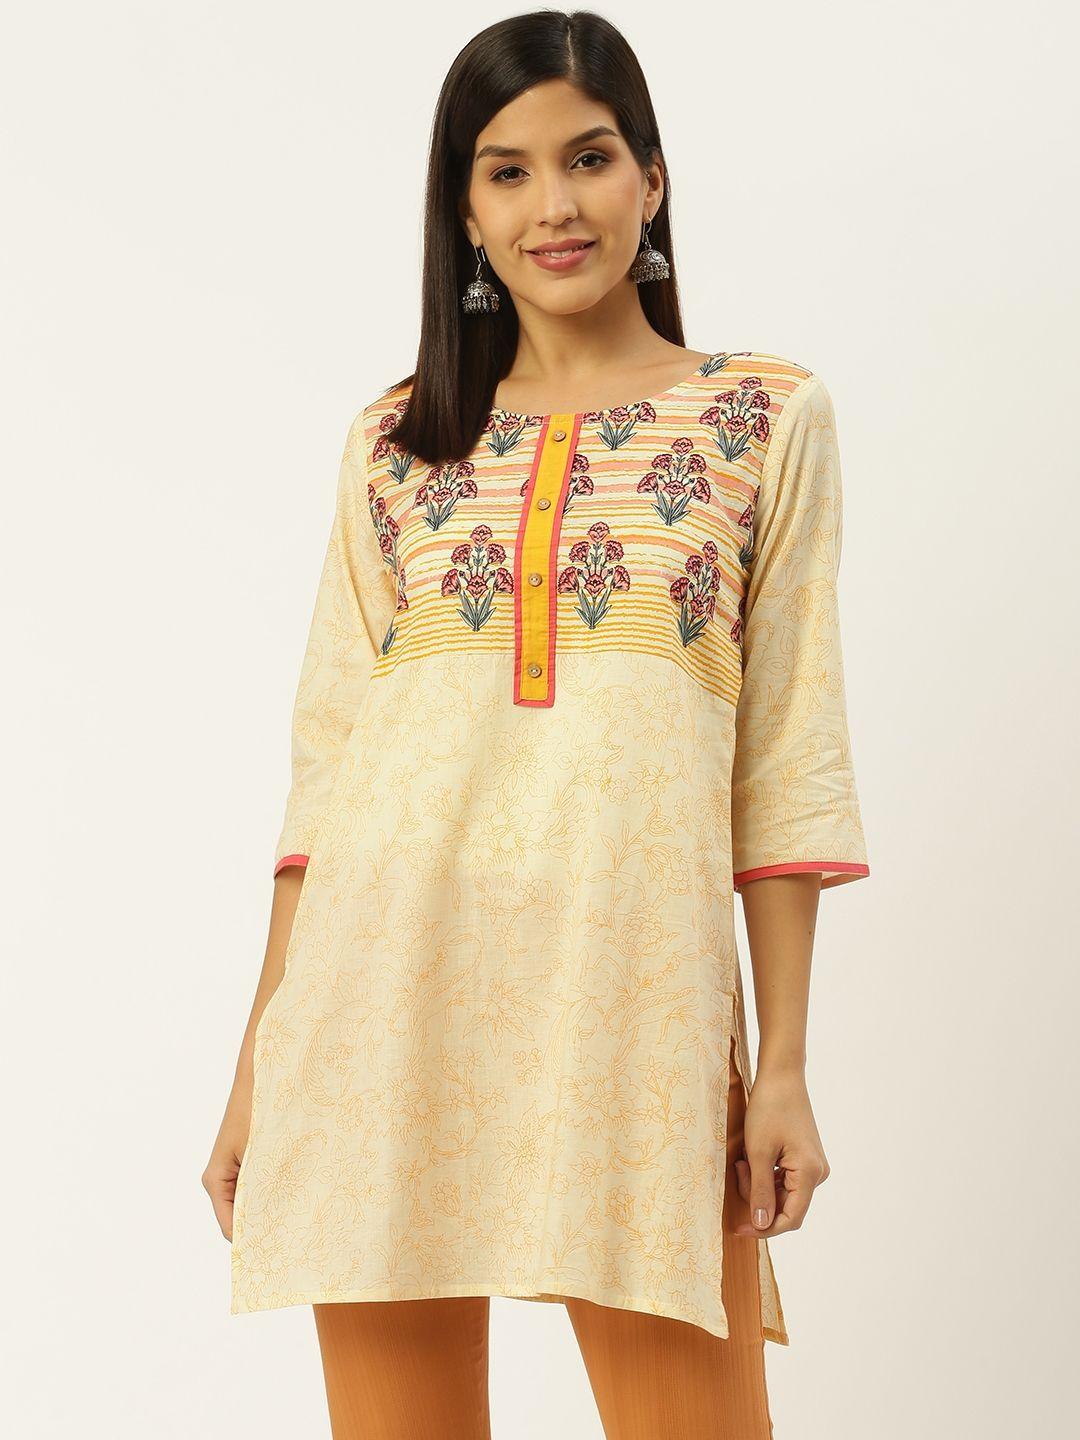 rangmayee women cream-coloured & orange printed tunic